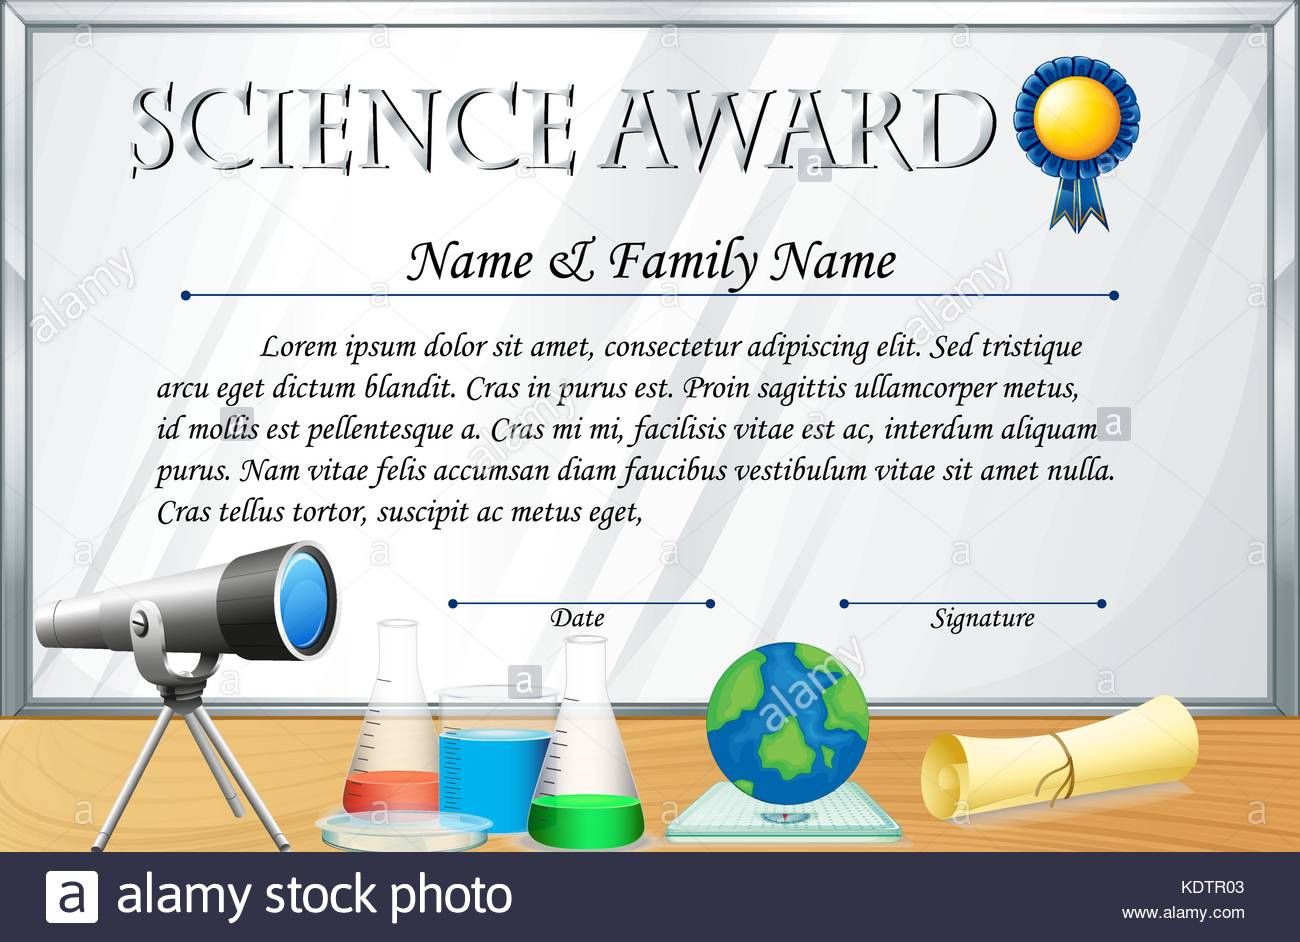 Science Achievement Certificate Template  Paspas inside Free Science Award Certificate Templates